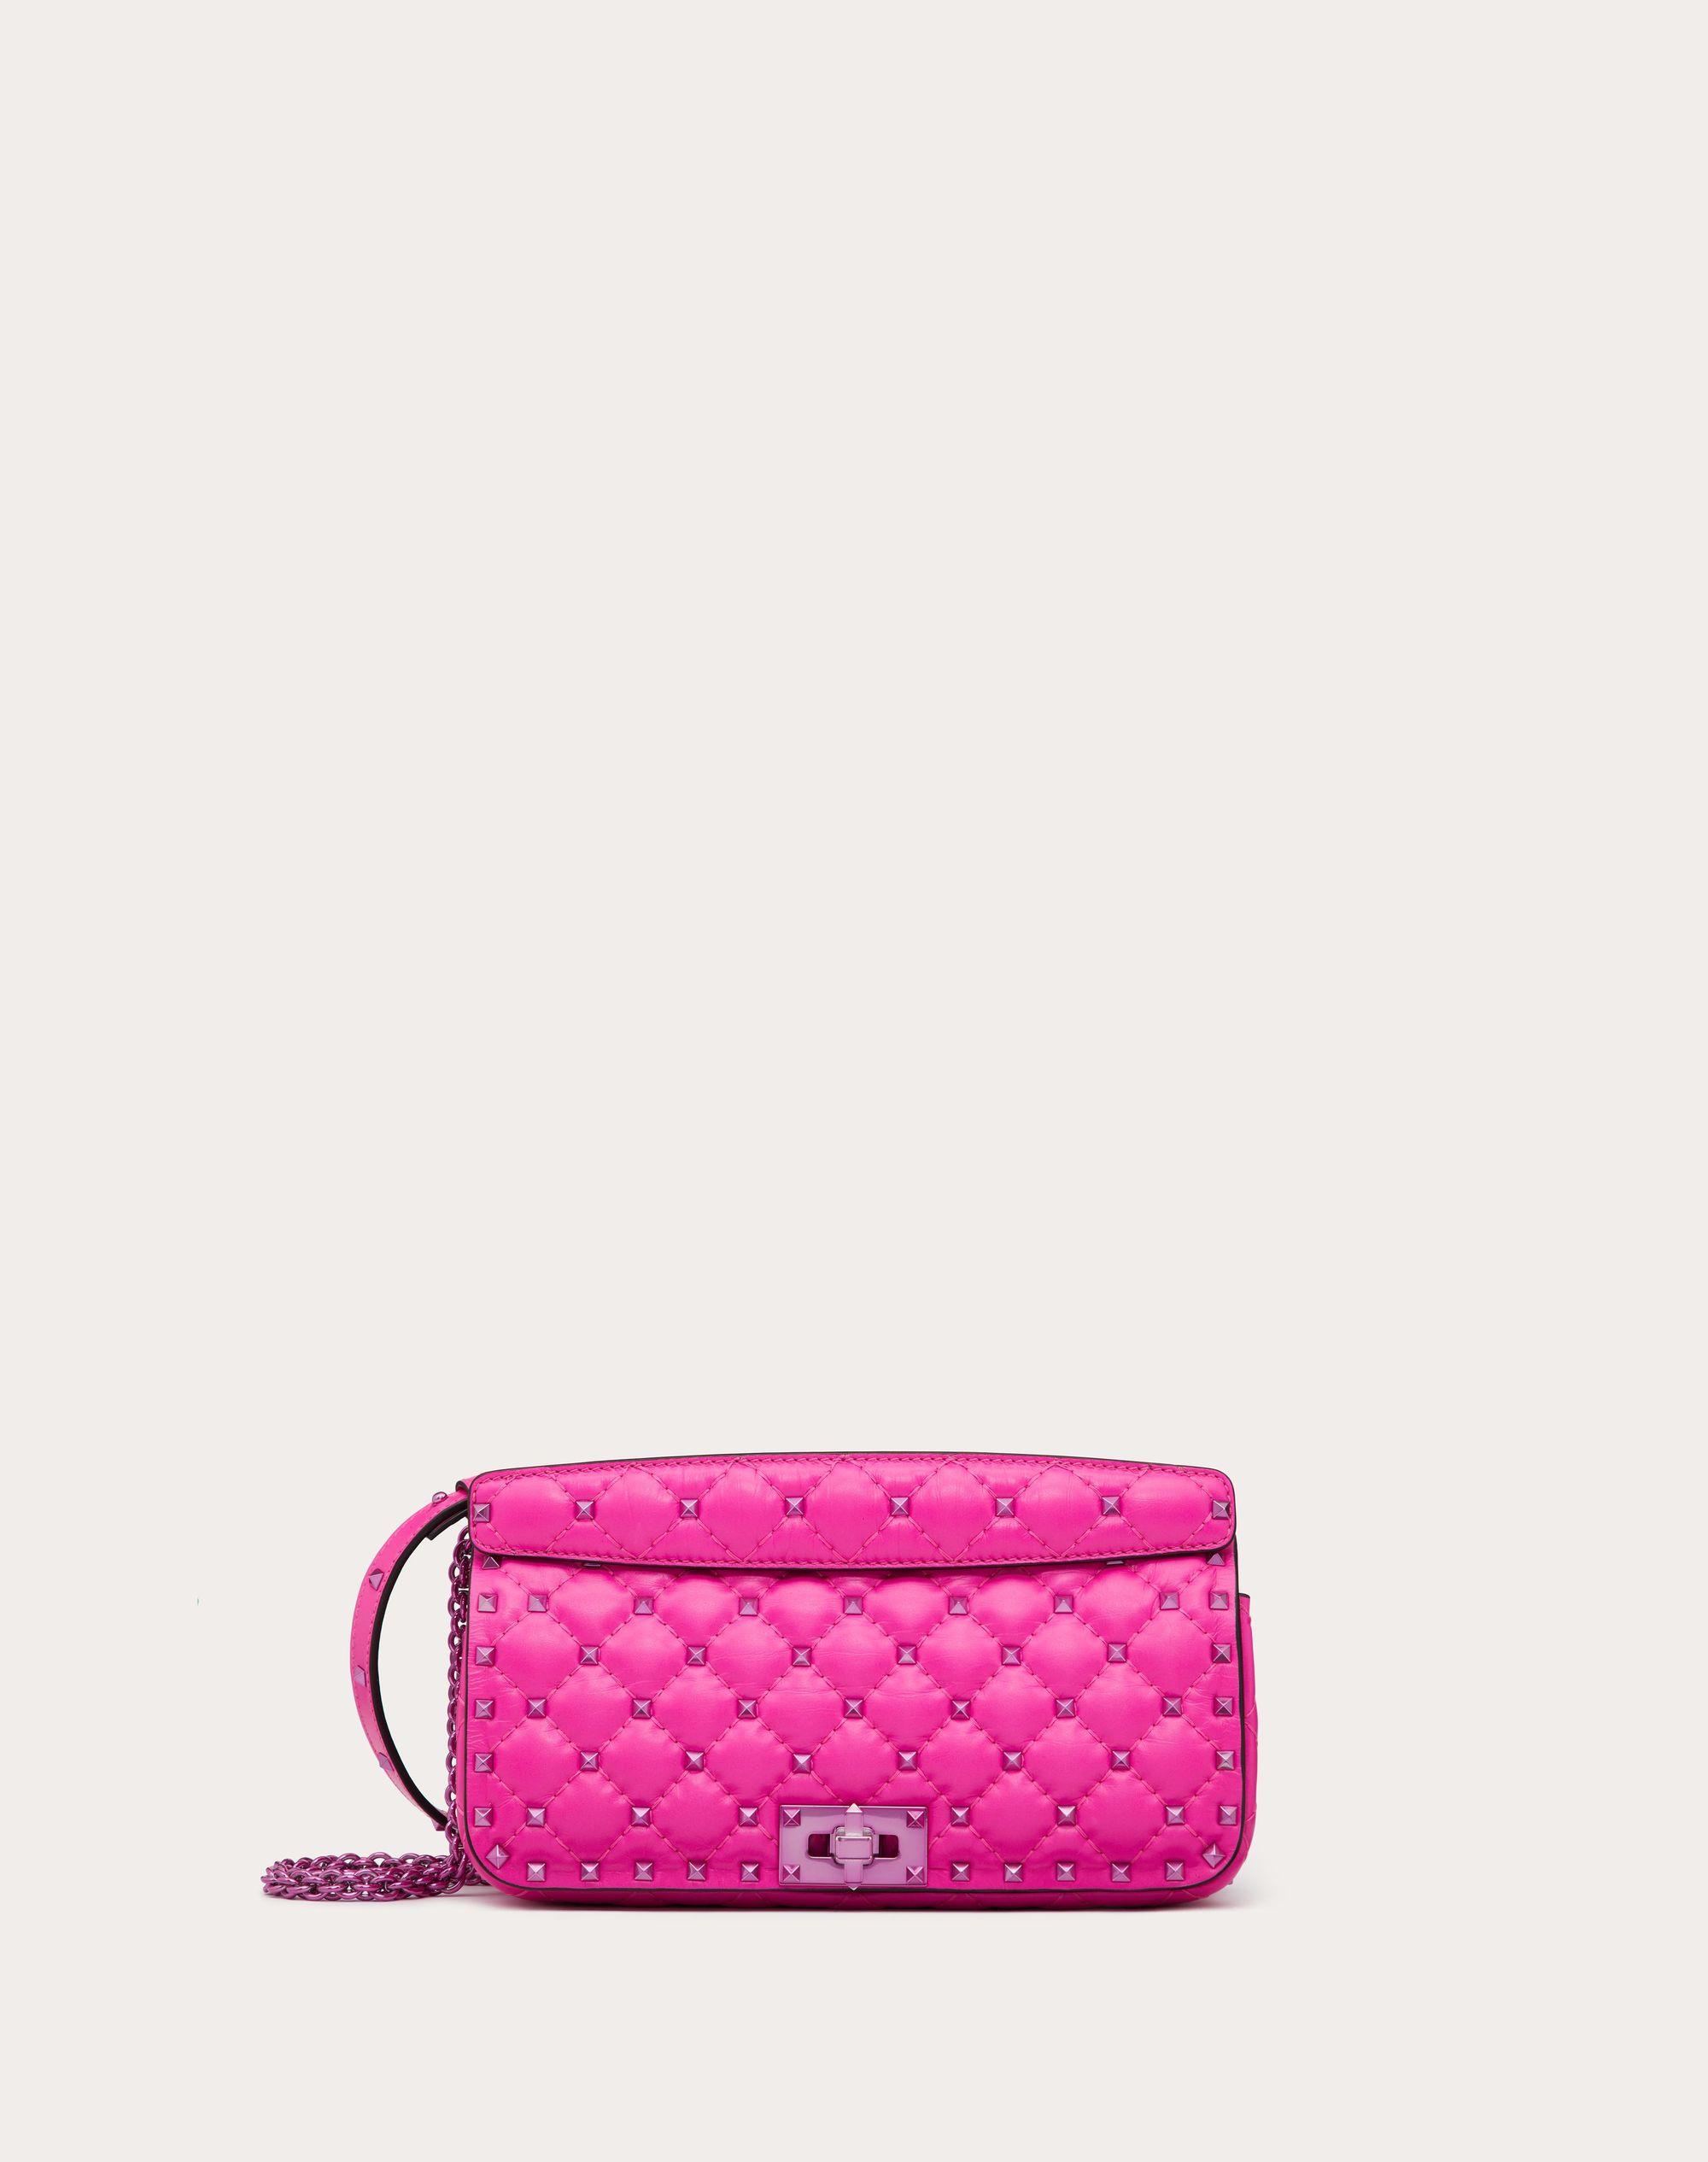 Valentino Garavani Rockstud Spike Calfskin Shoulder Bag in Pink | Lyst